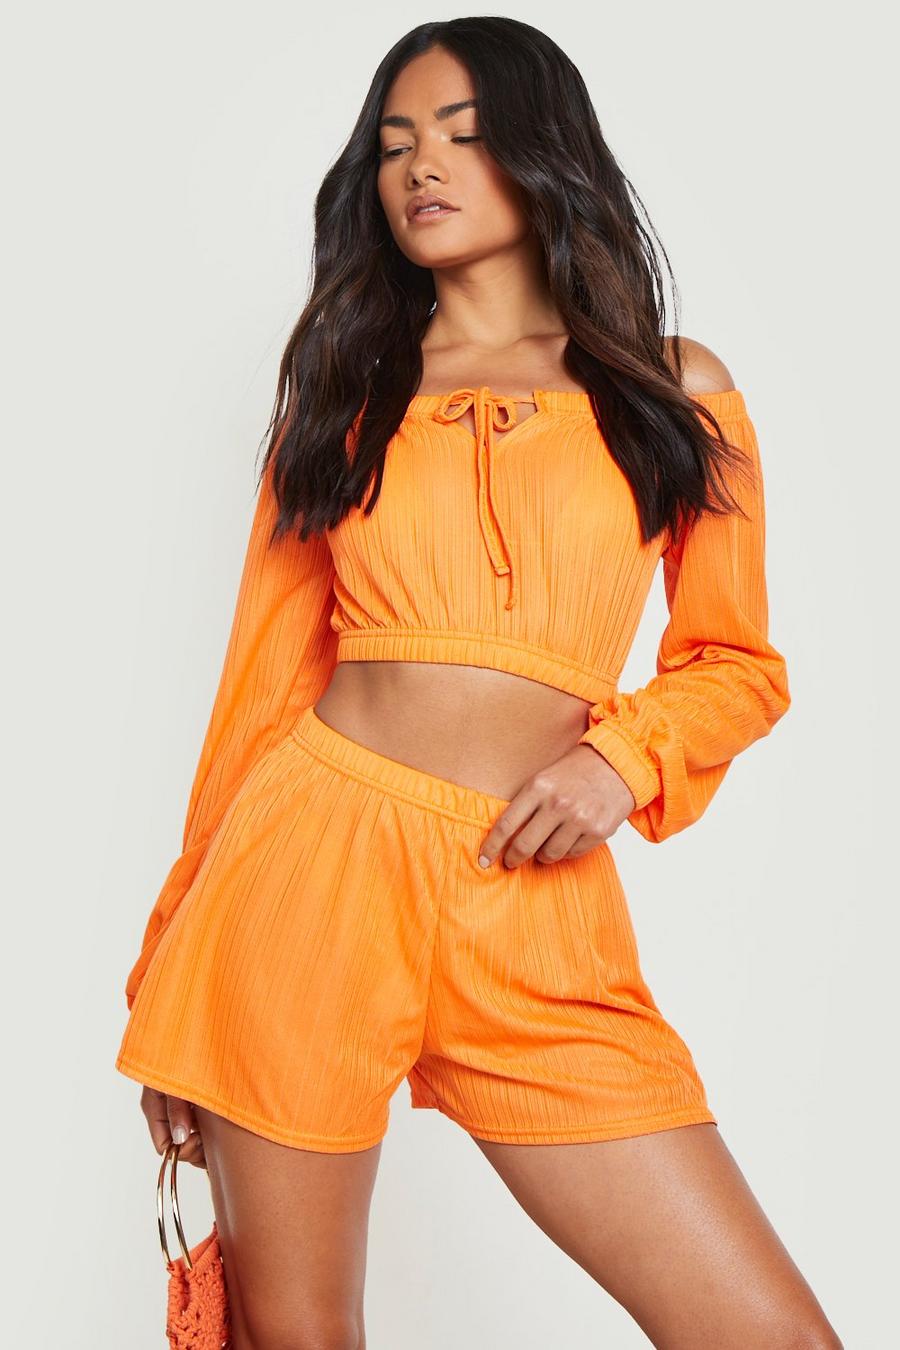 Pantalón corto para la playa texturizado de rayas, Orange naranja